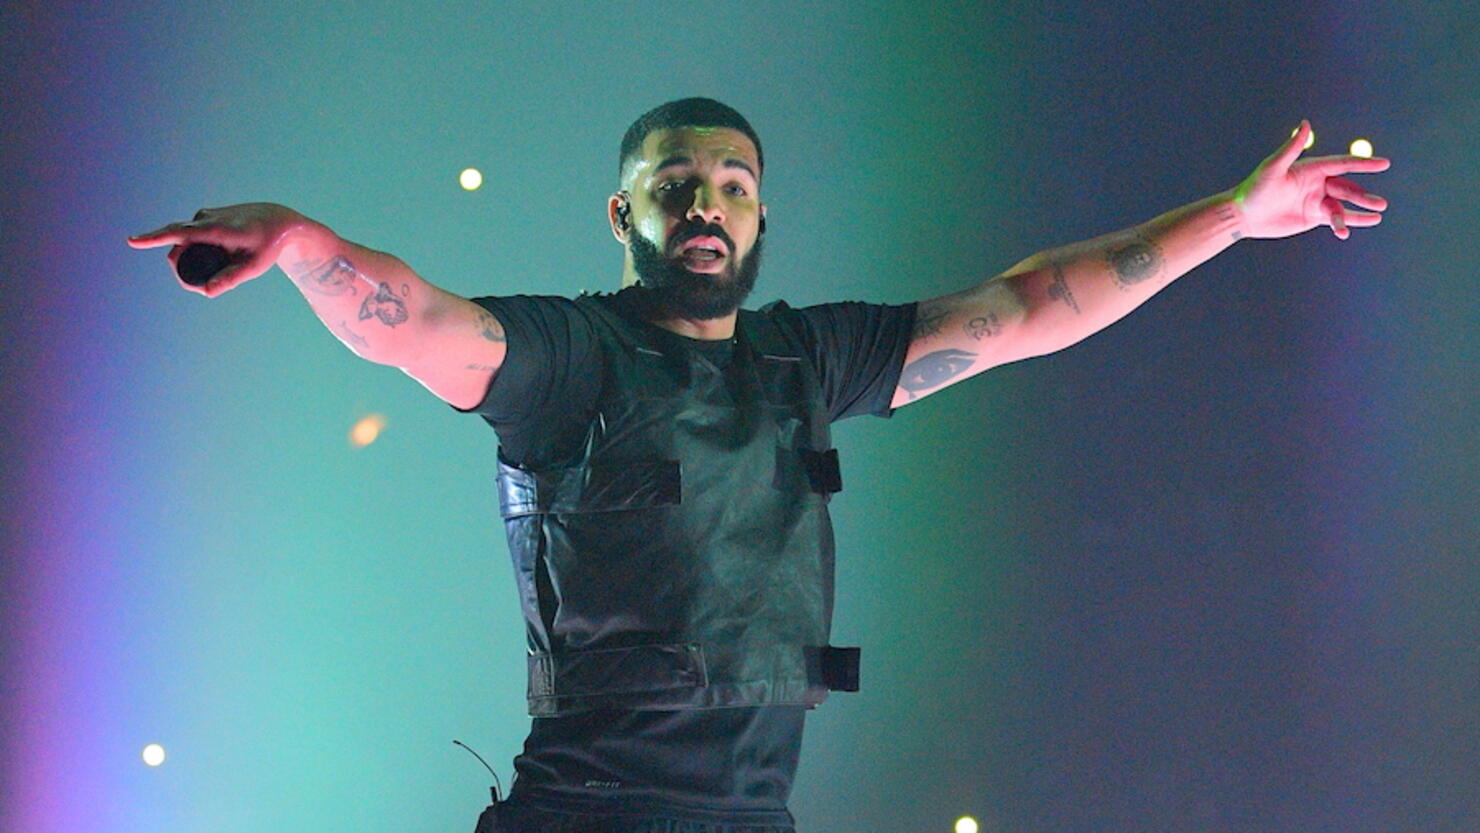 Drake's My Top Hooping Rapper, Has Knockdown J, Says Trainer Dribble2Much